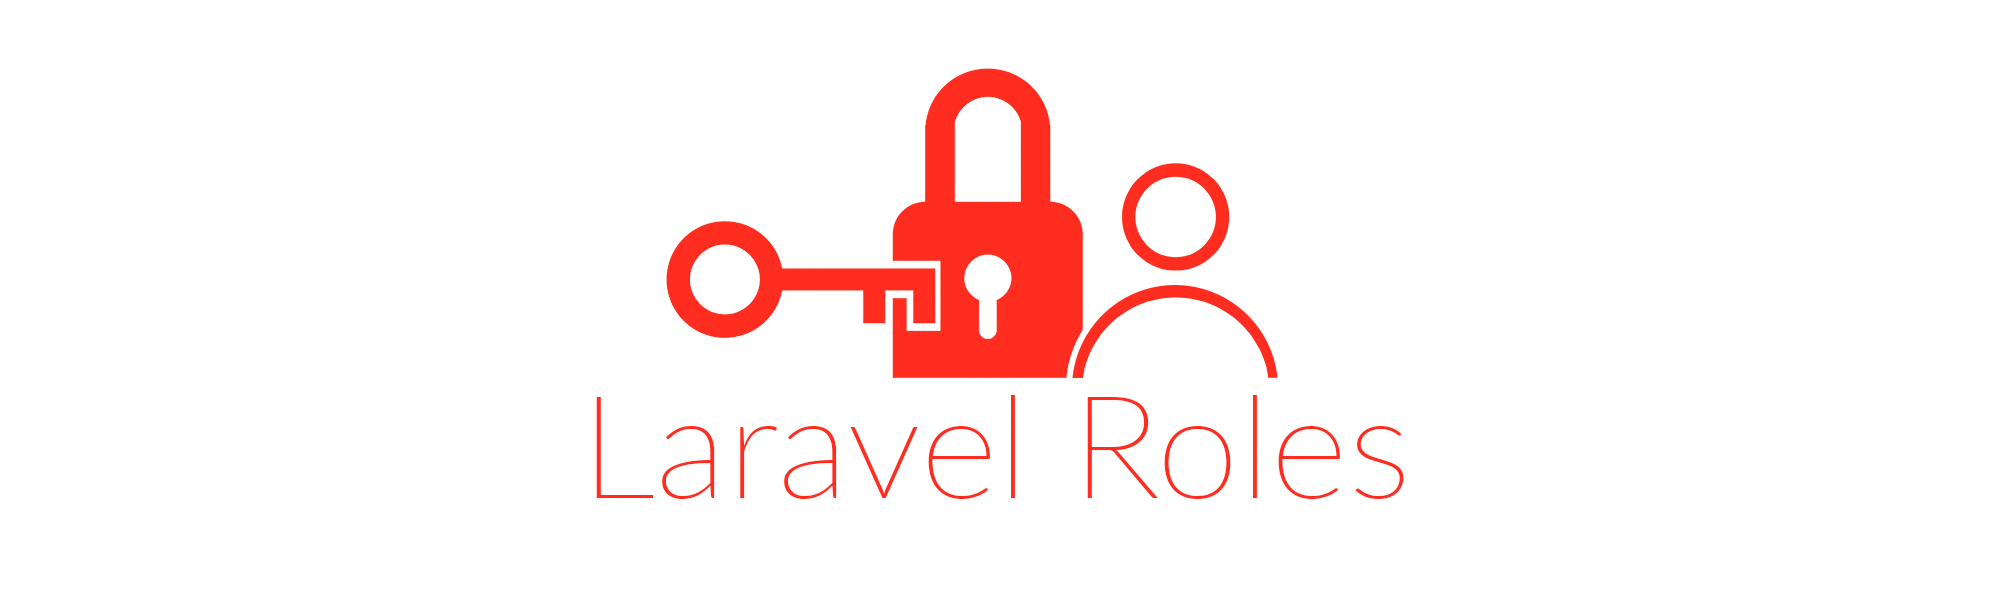 laravel-roles